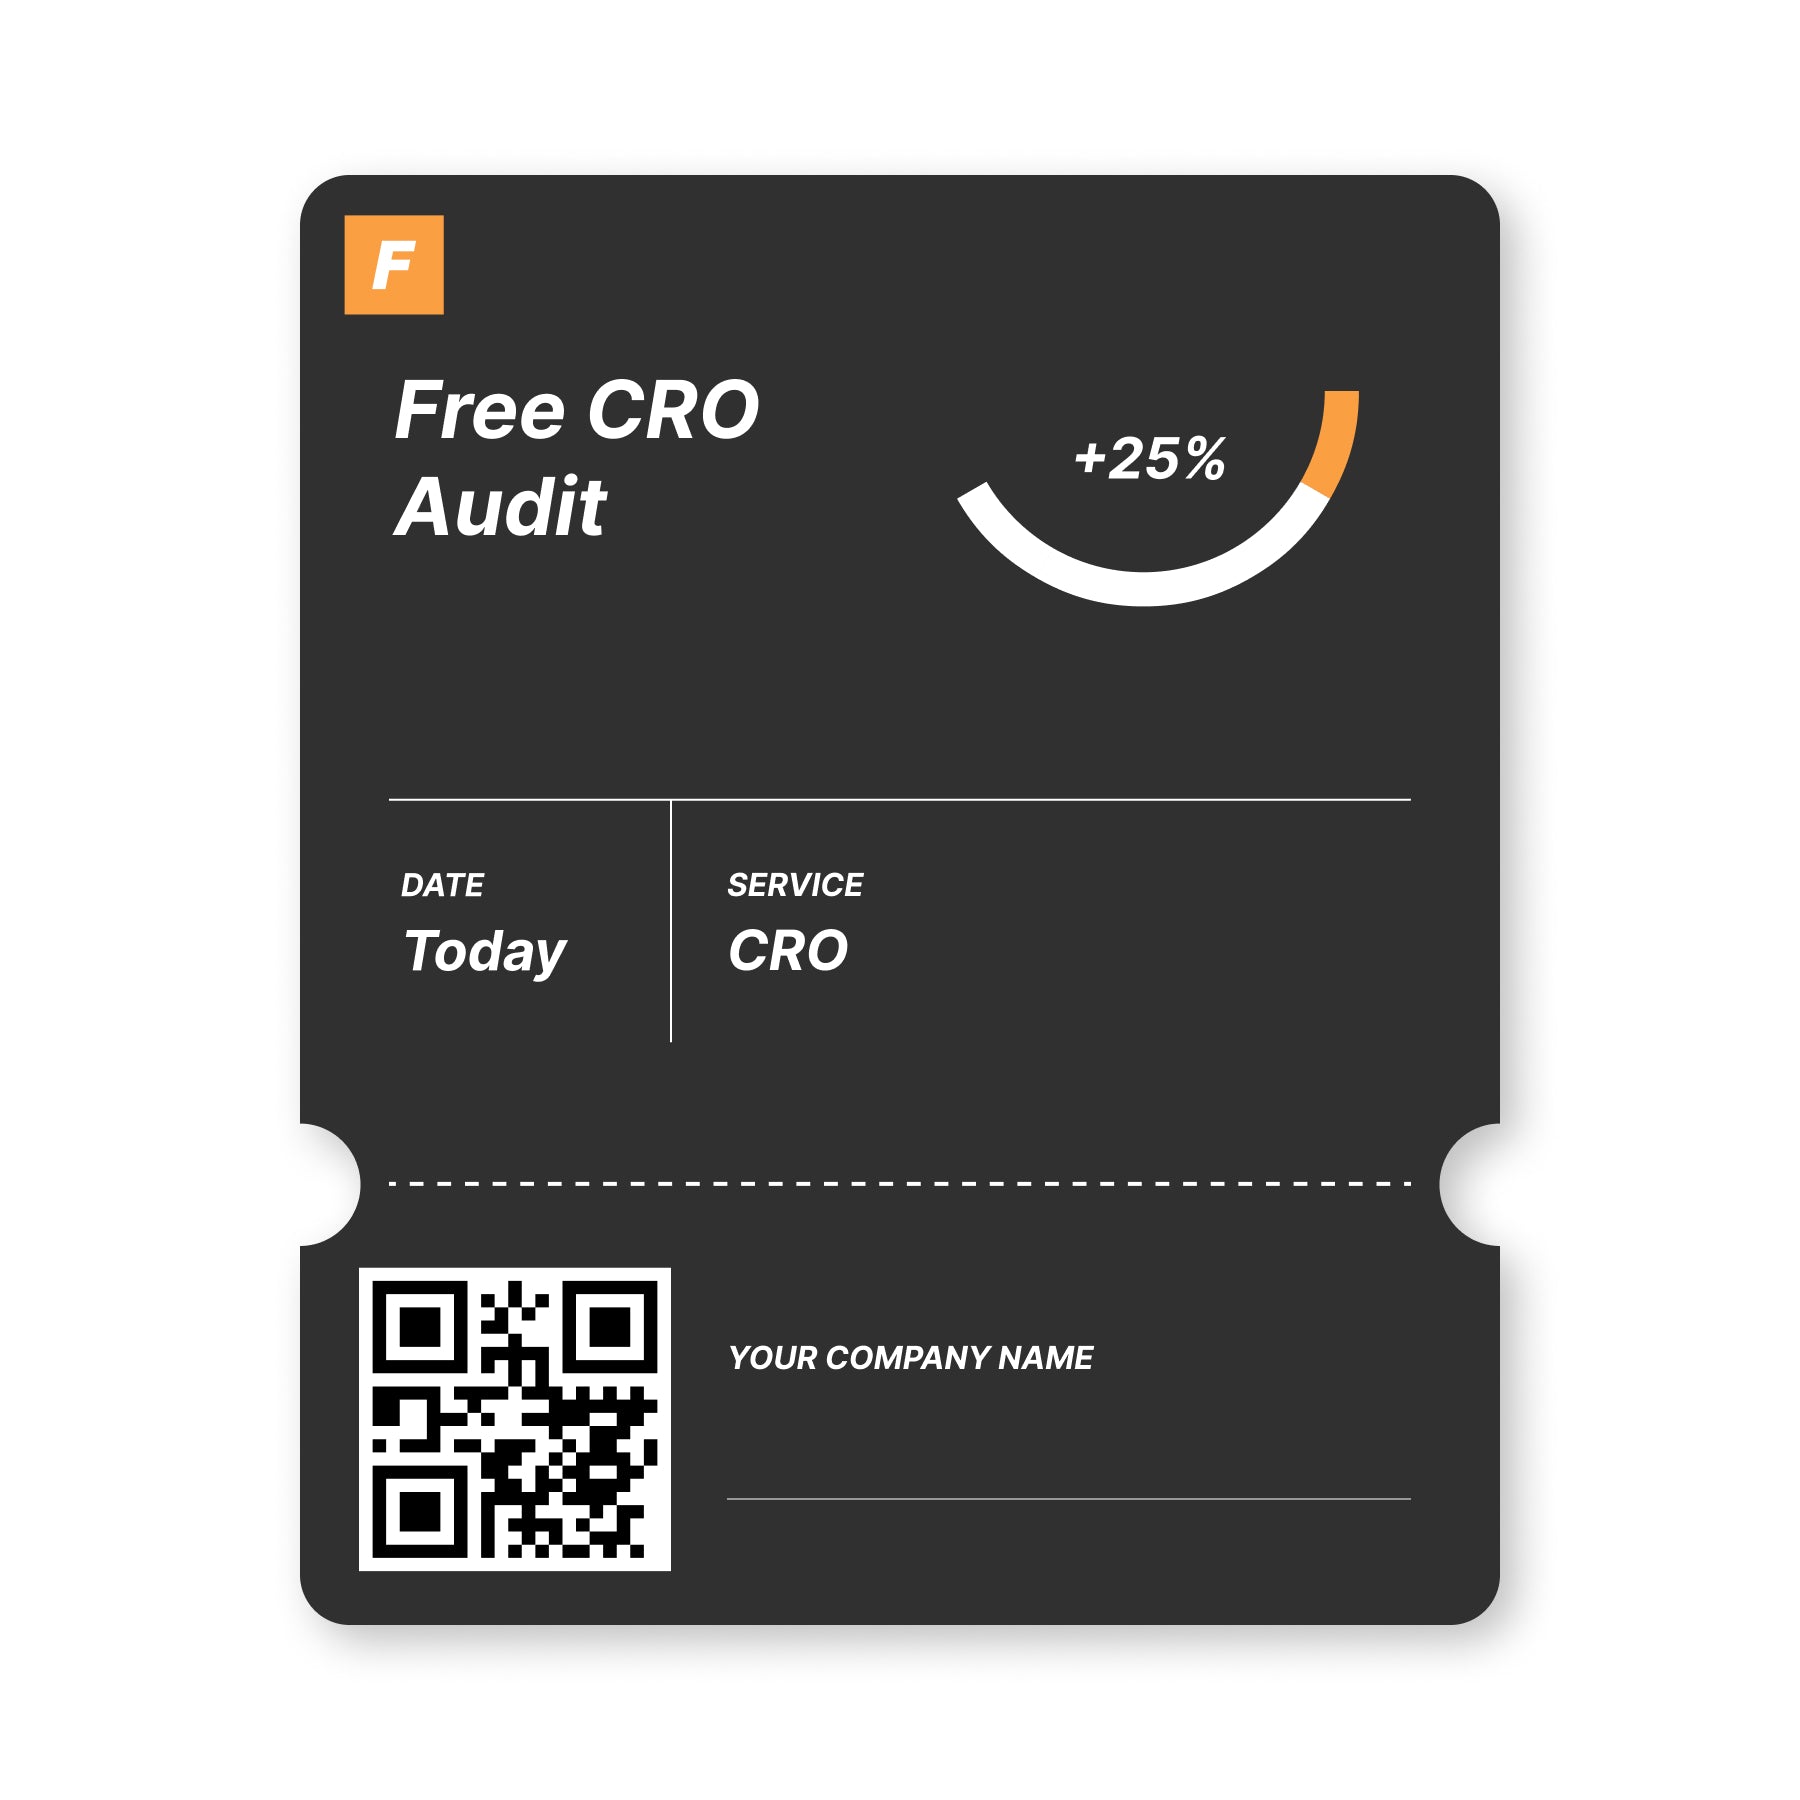 Free CRO Audit